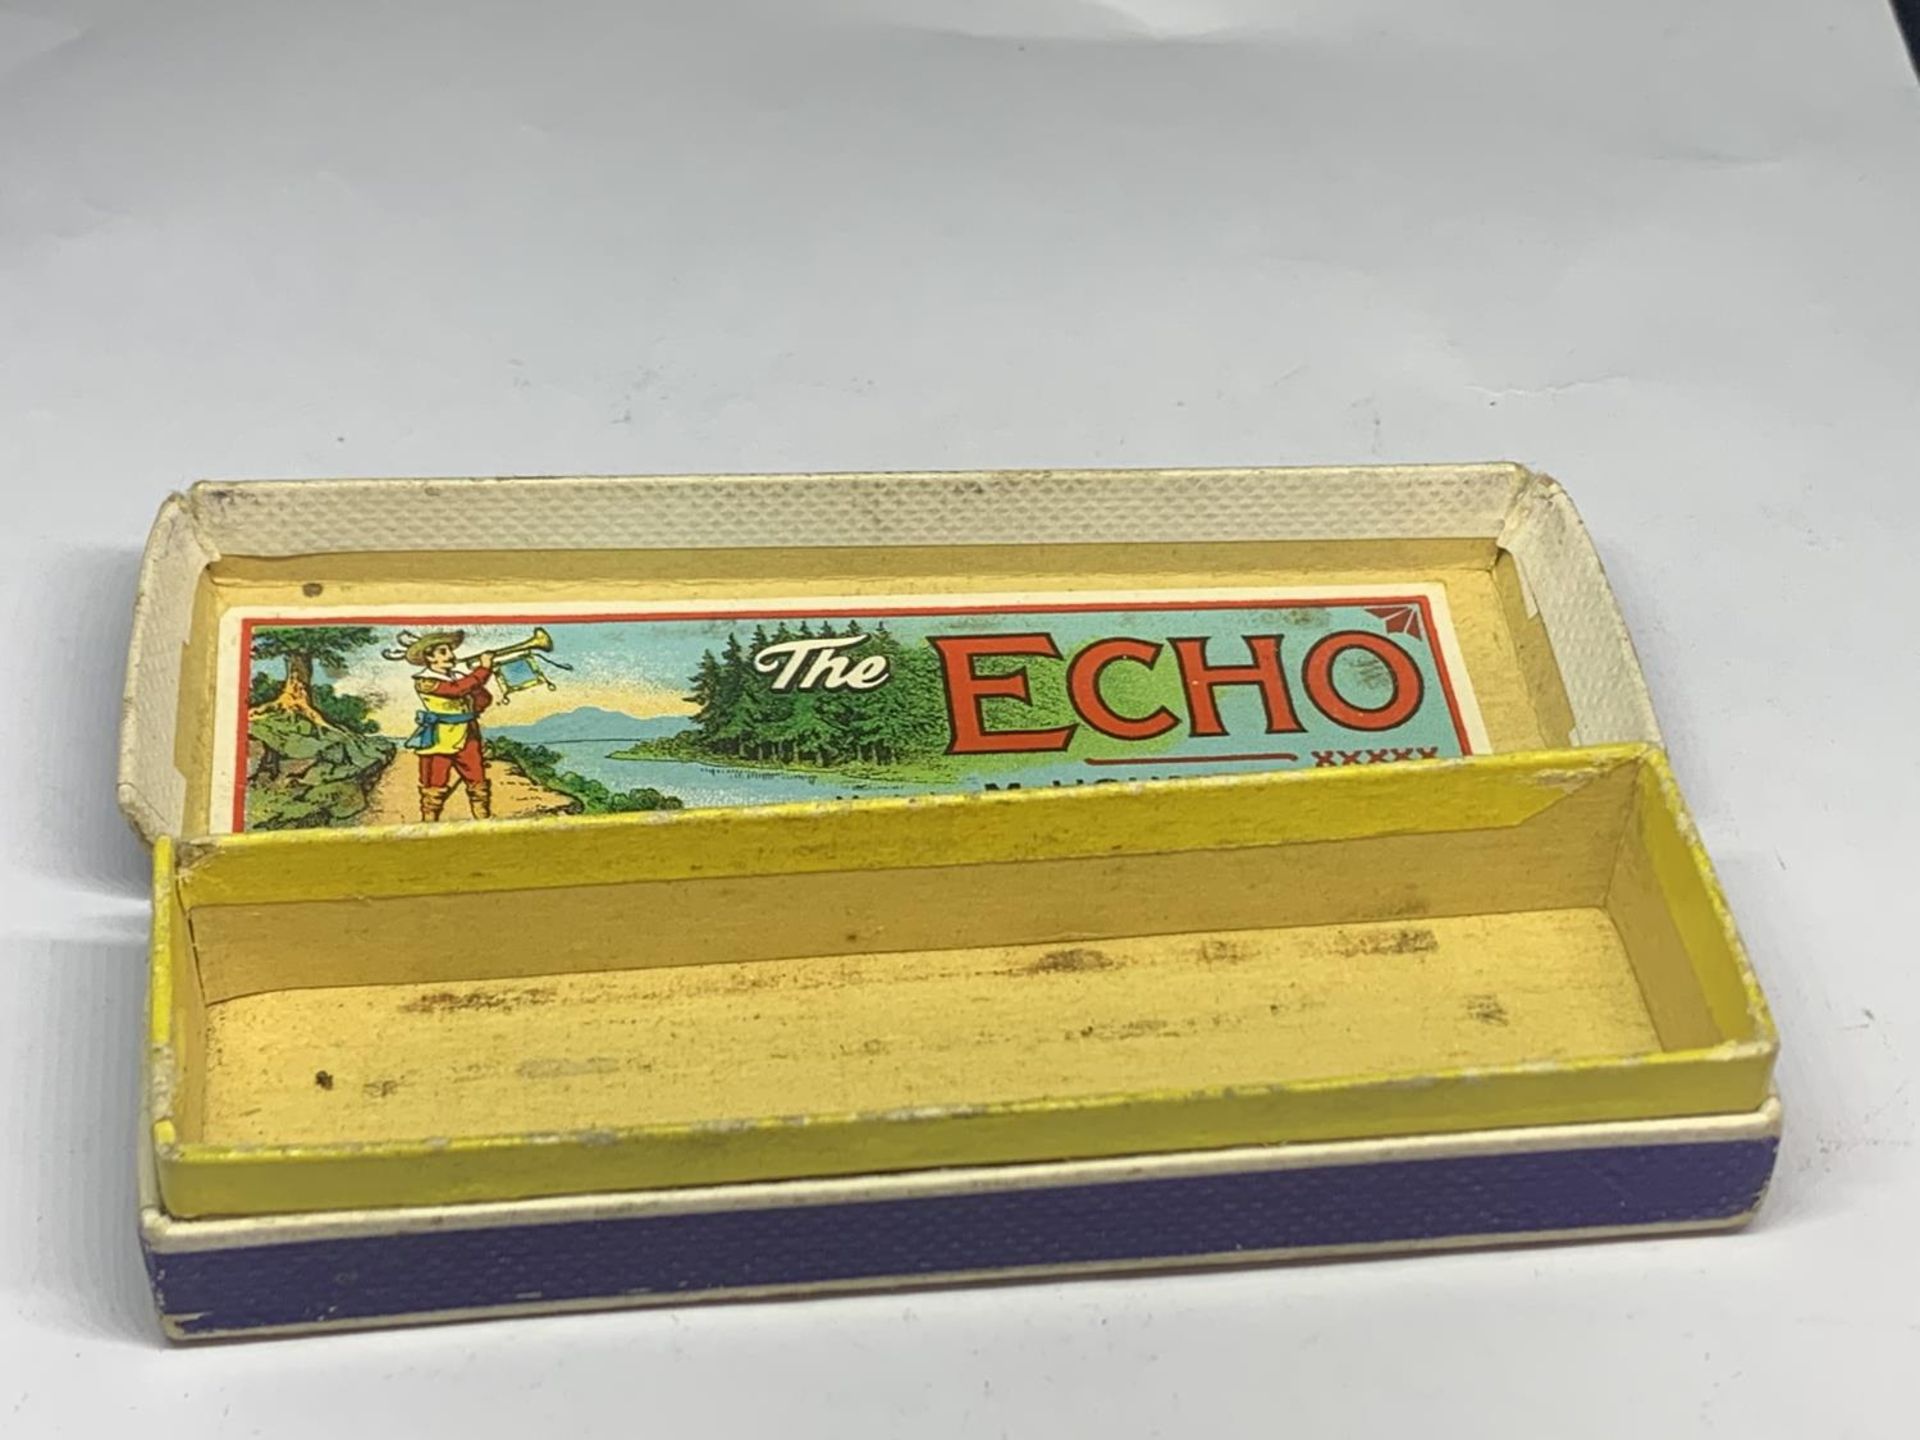 A VINTAGE HOHNER ECHO SUPER VAMPER MOUTH ORGAN WITH ORIGINAL BOX - Image 4 of 4